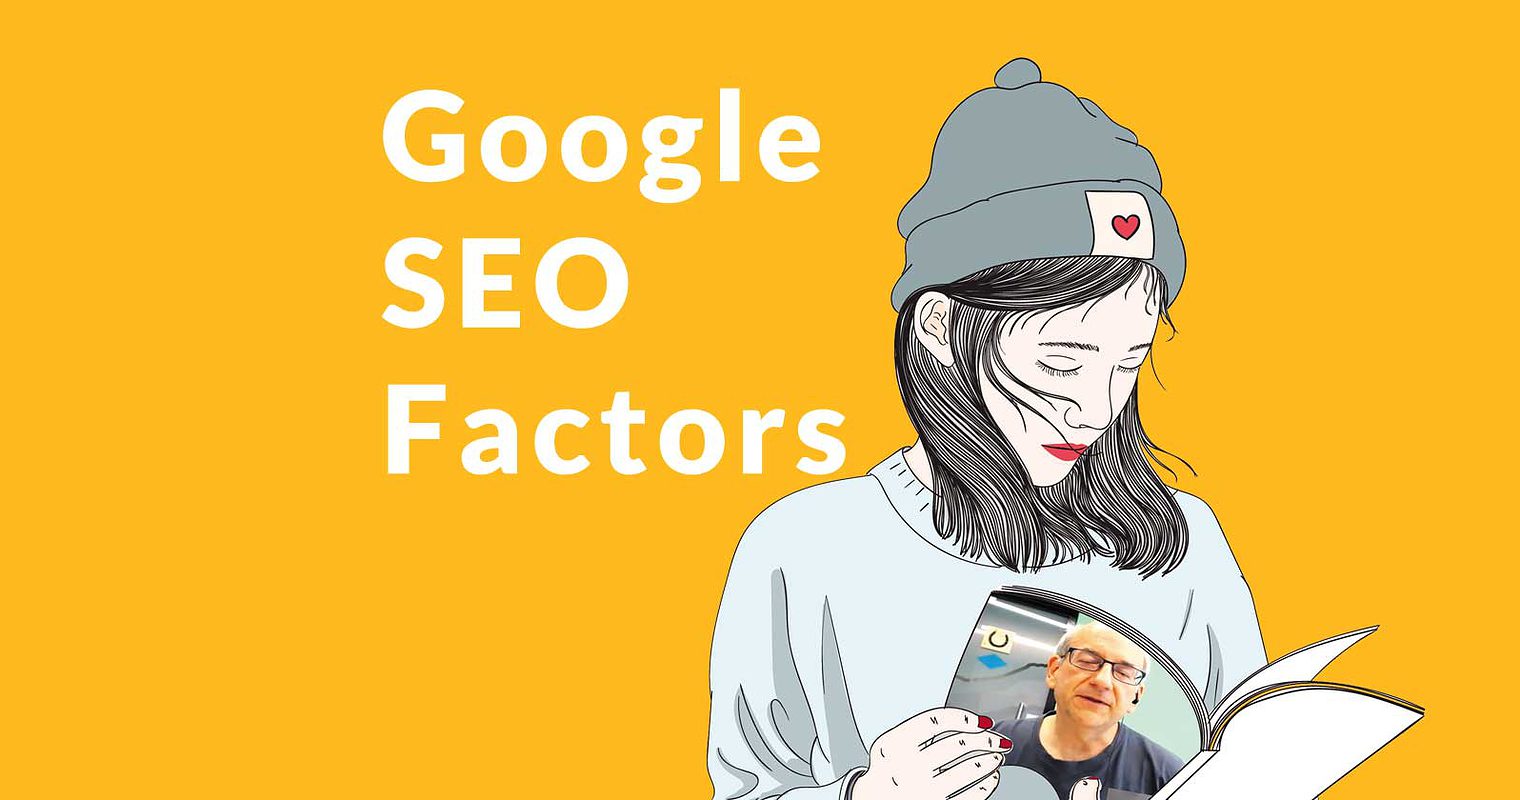 Google’s John Mueller is Asked About Top 3 SEO Factors